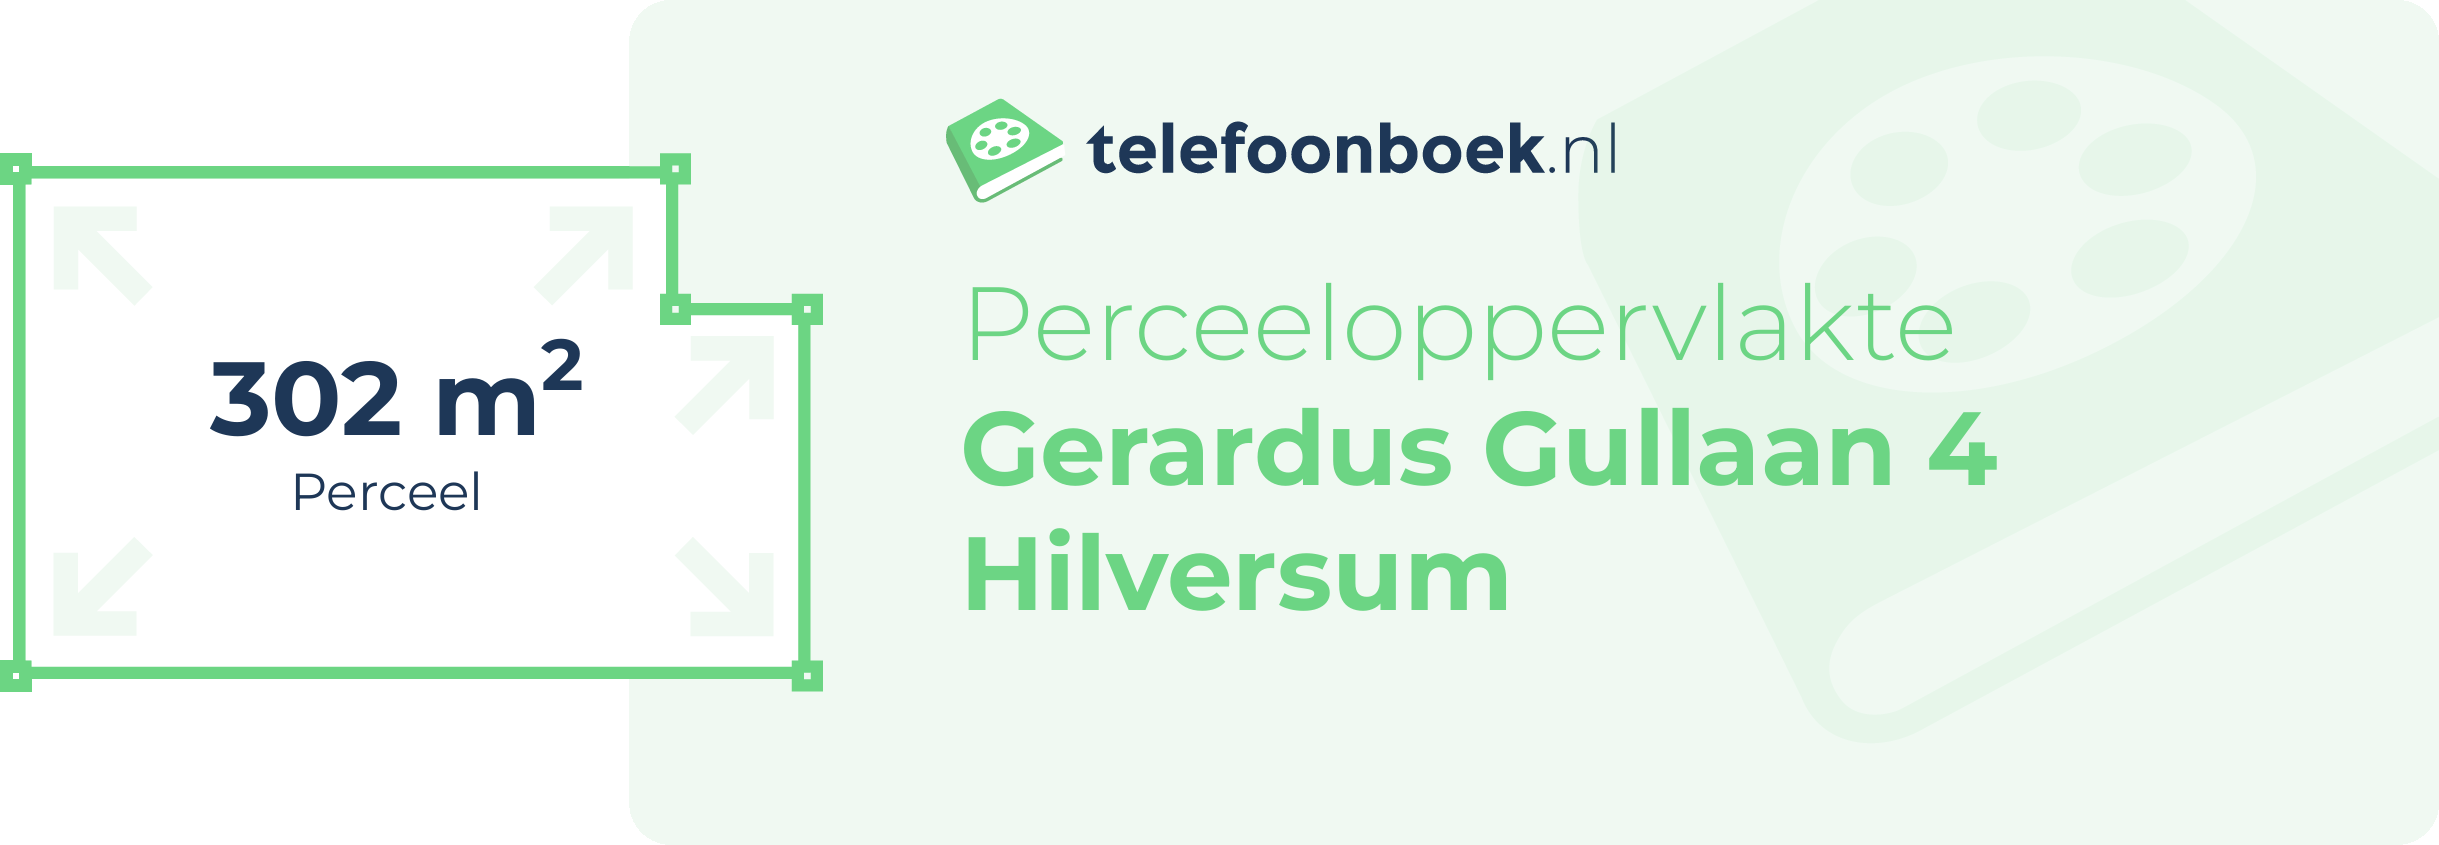 Perceeloppervlakte Gerardus Gullaan 4 Hilversum